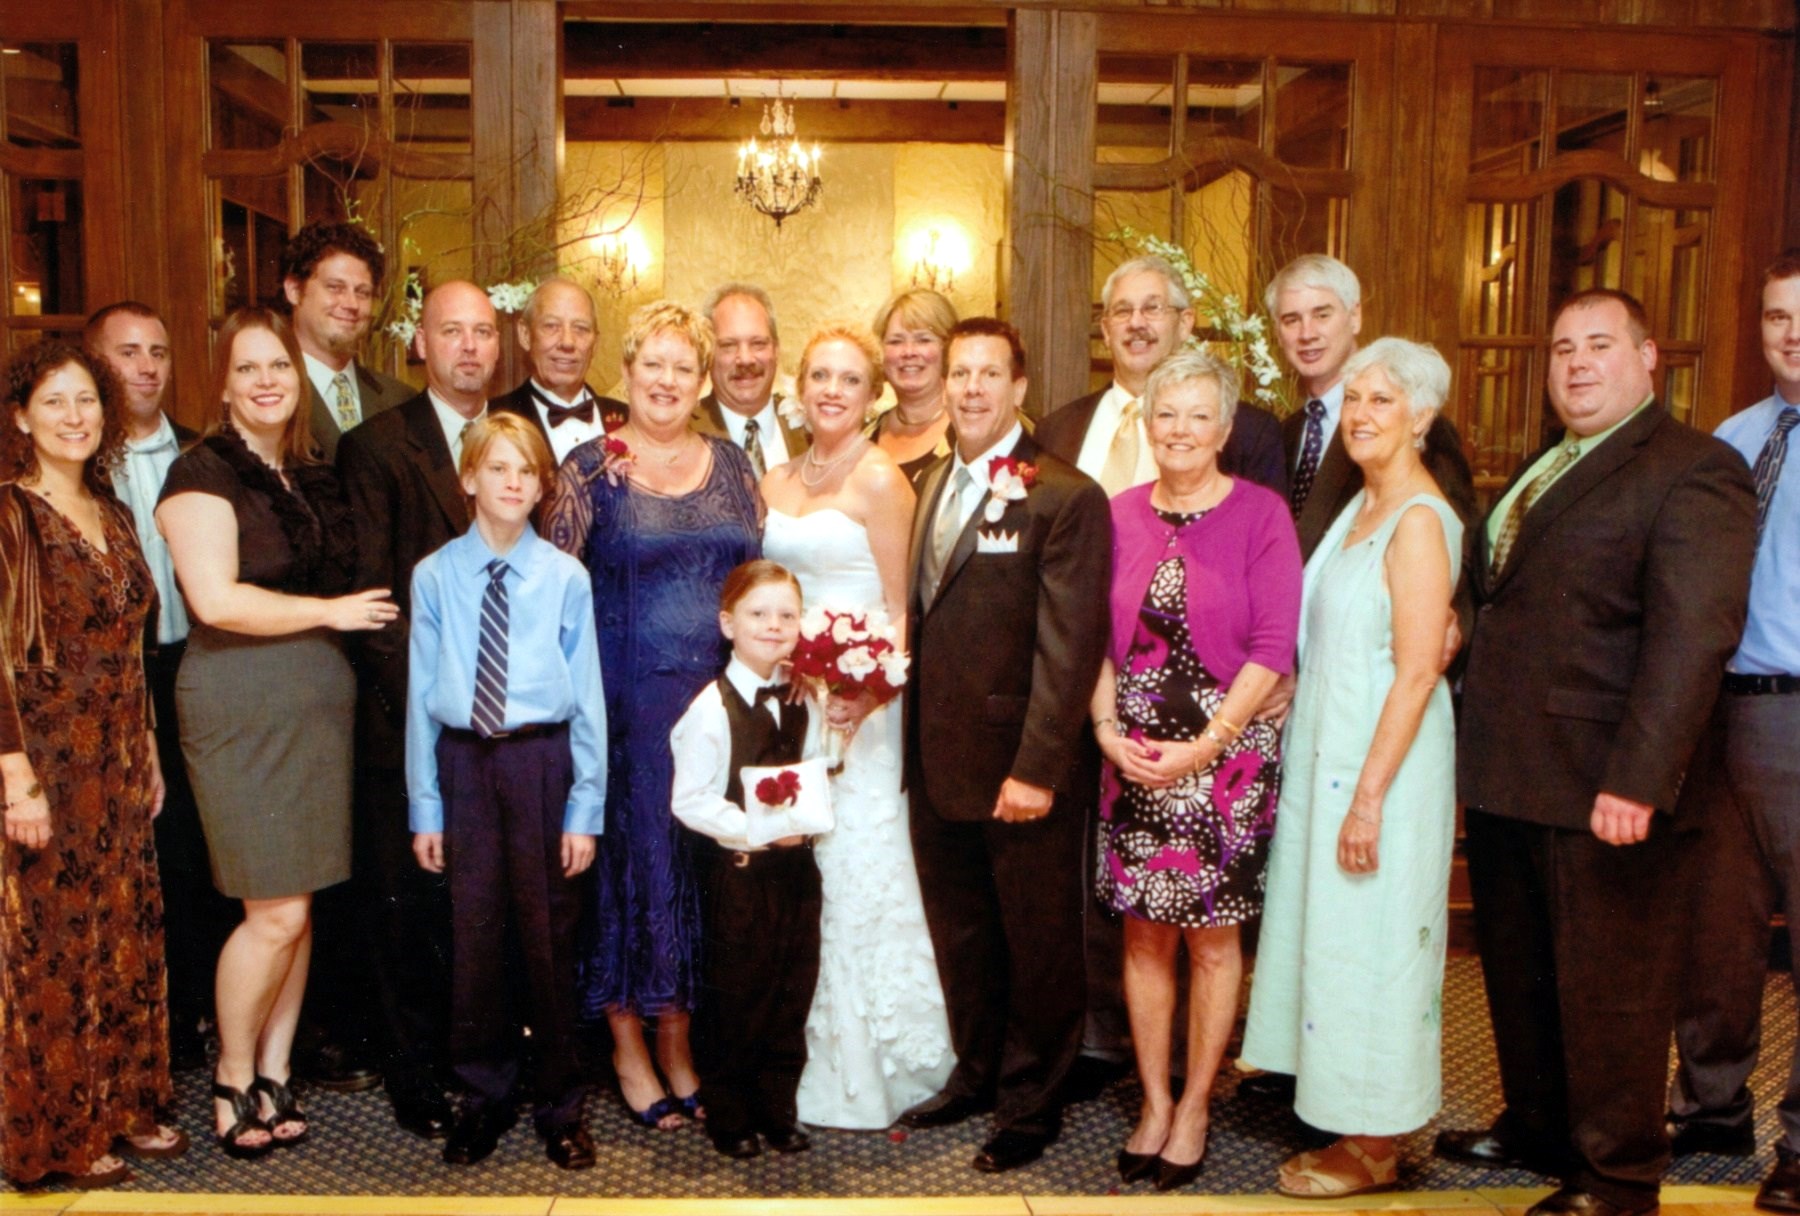 Ron Guidry - Age, Family, Bio